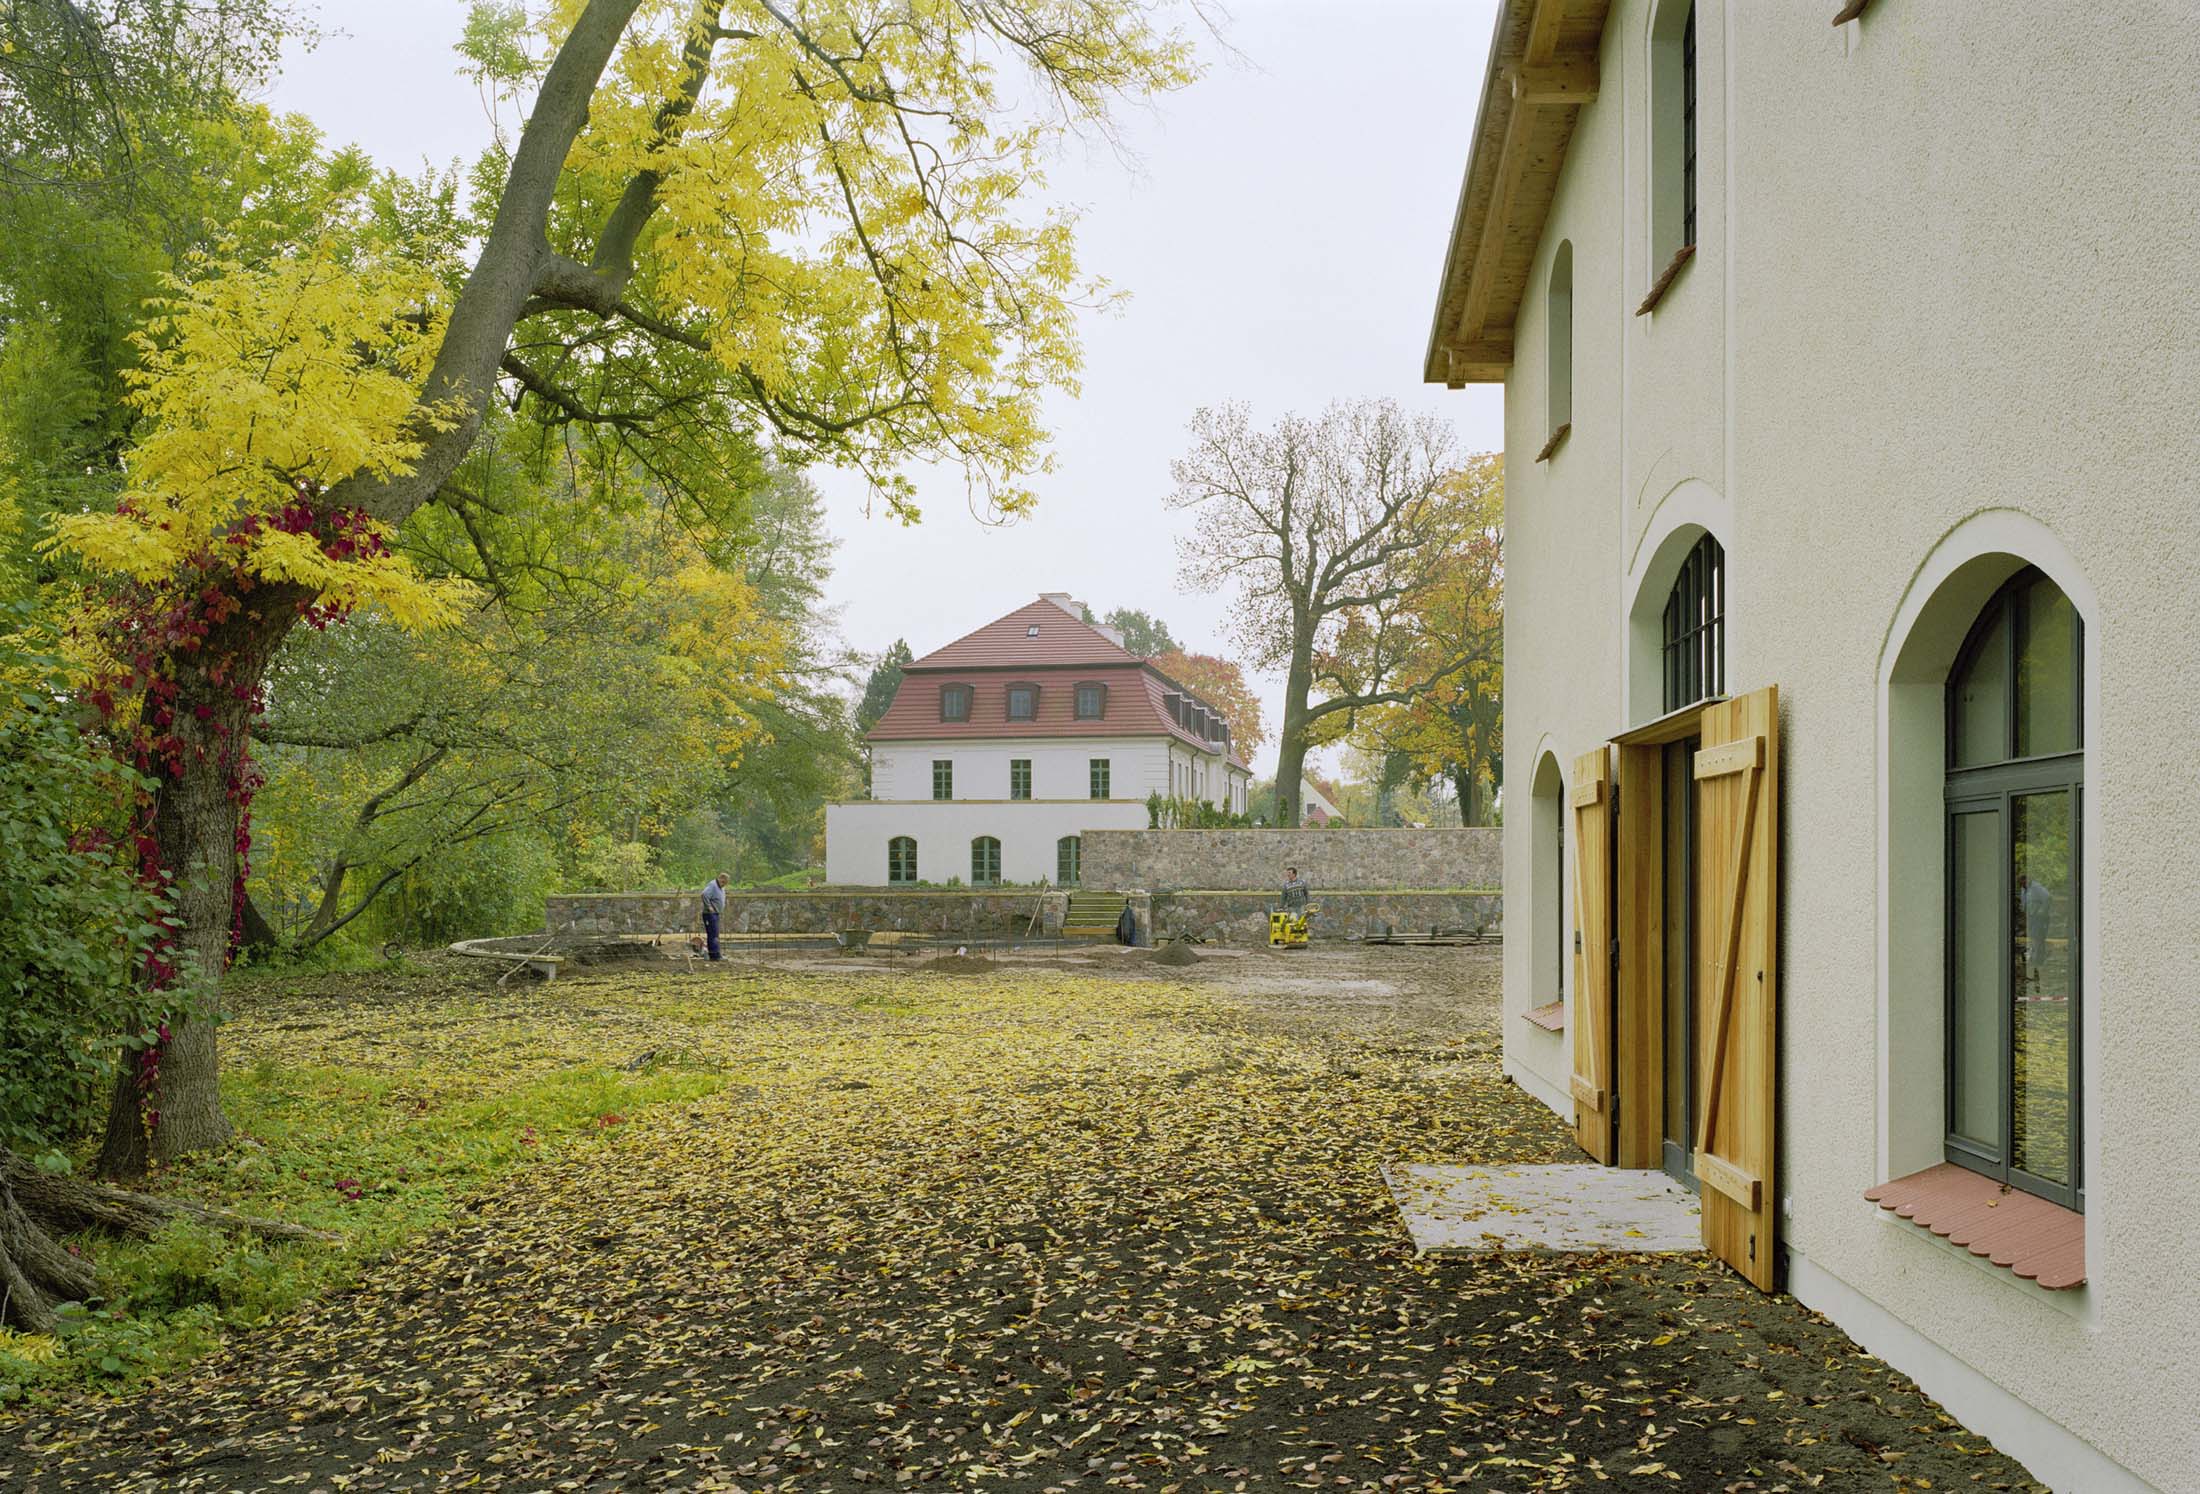 Eibenhof in Bad Saarow - Pferdestall